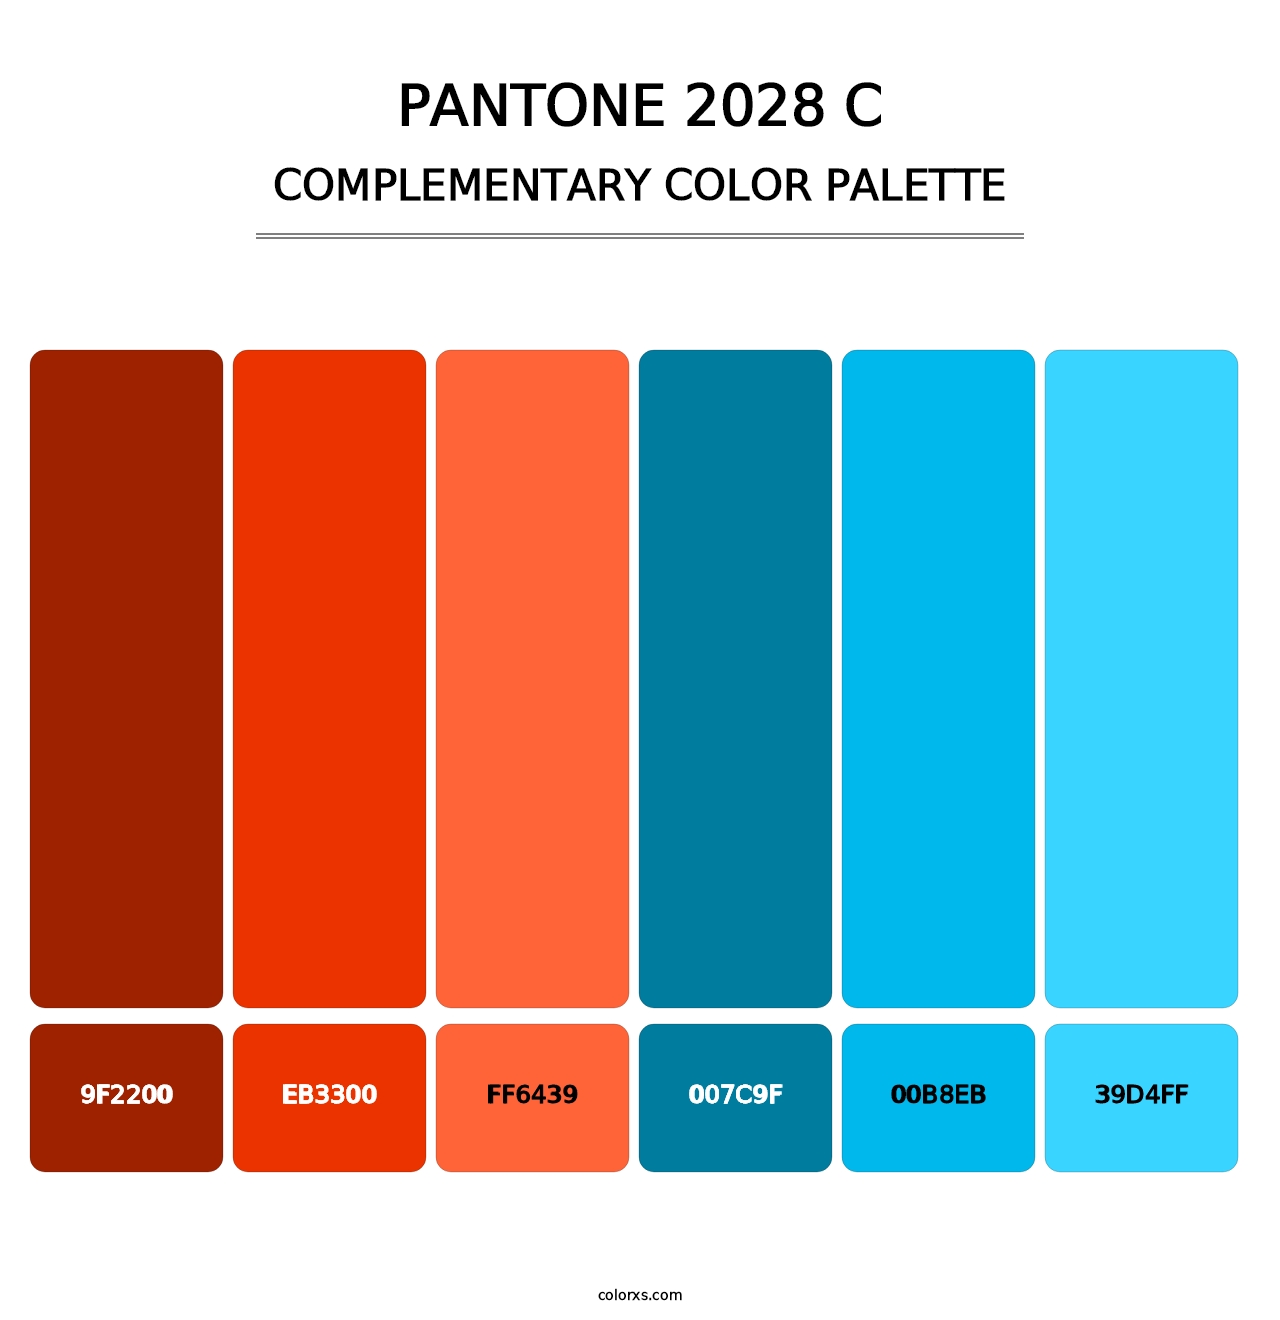 PANTONE 2028 C - Complementary Color Palette